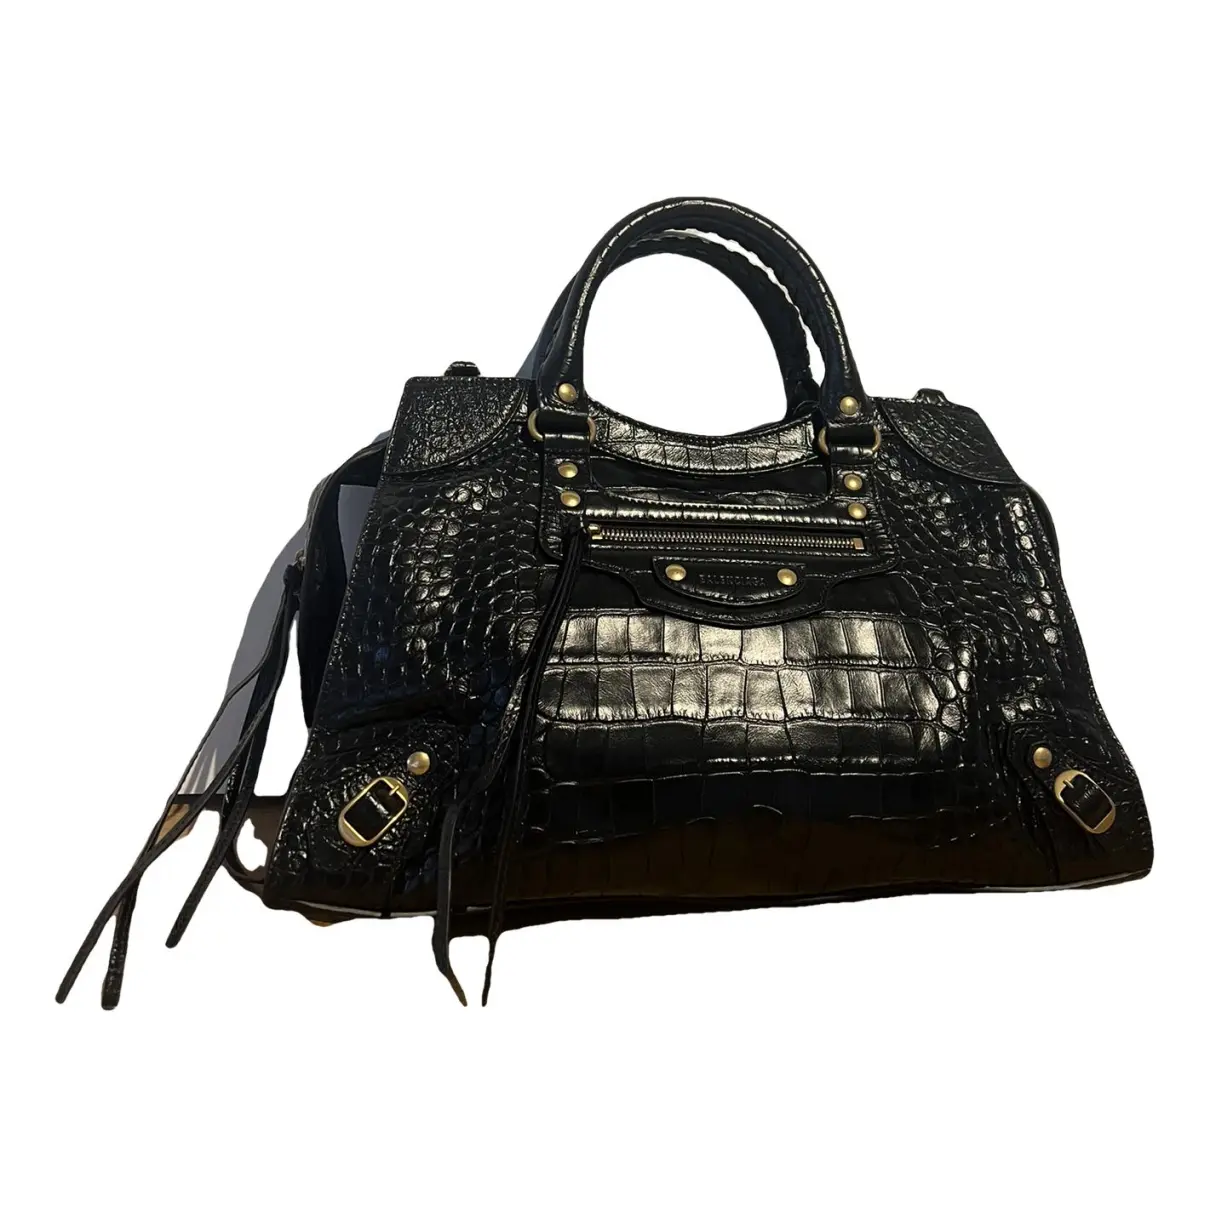 Neo Classic leather handbag